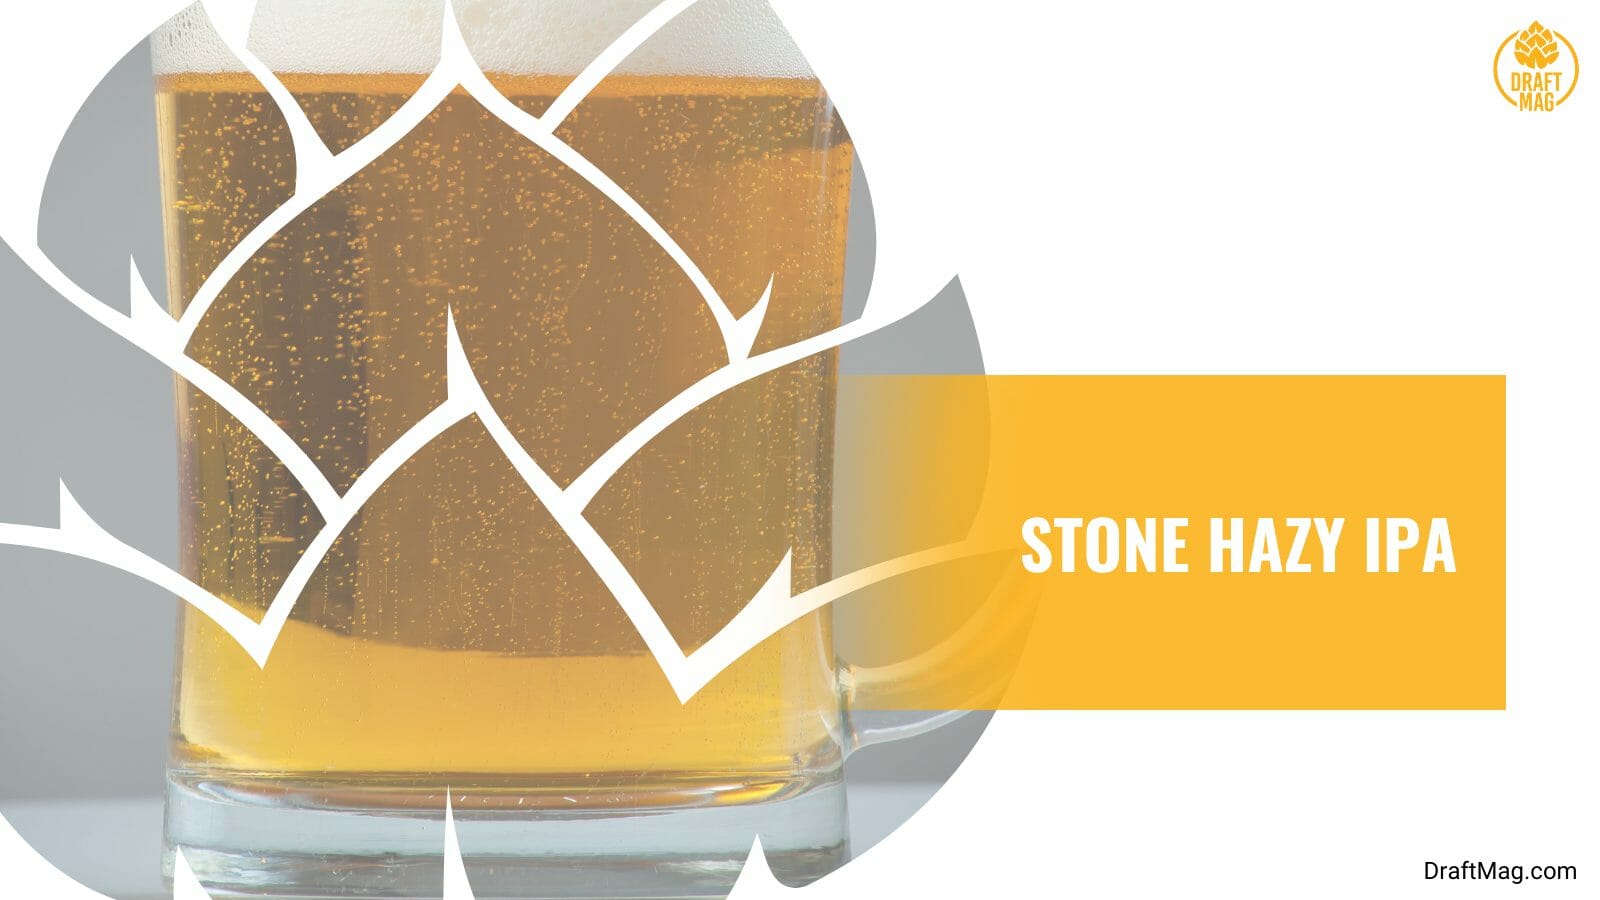 Stone Hazy IPA Features